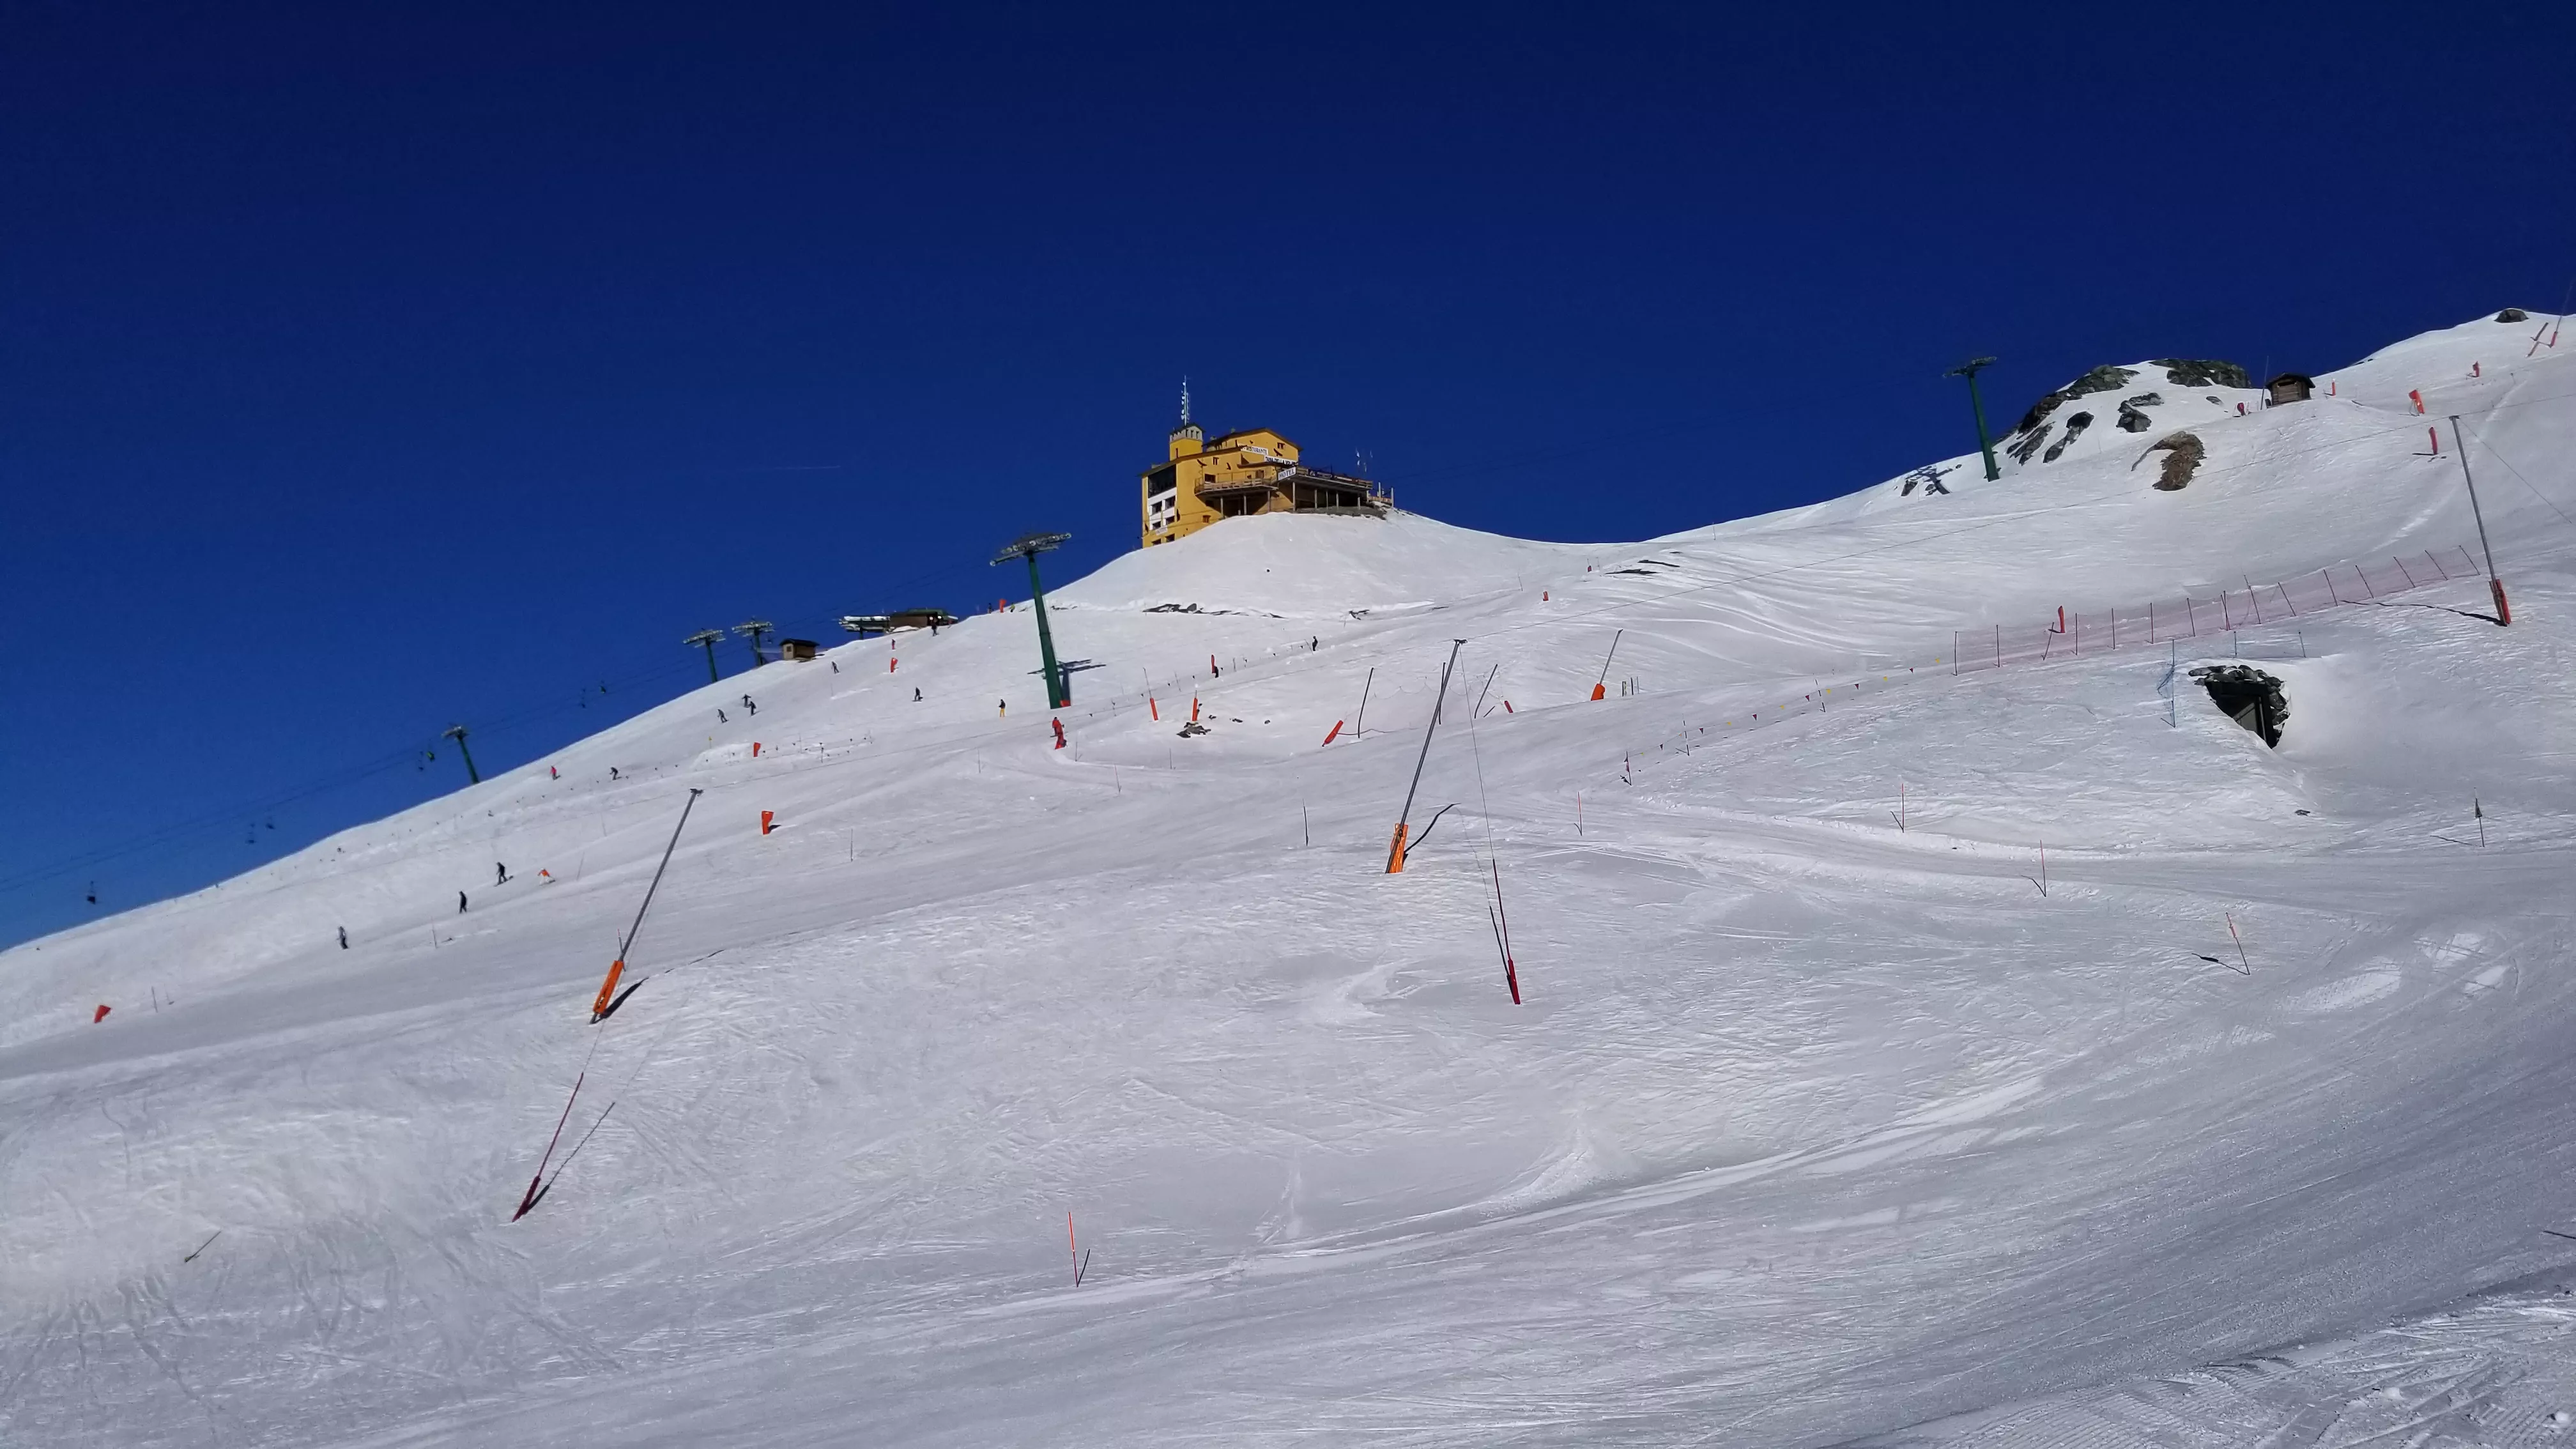 Via Lattea in Italy, Europe | Snowboarding,Mountaineering,Skiing - Rated 5.6